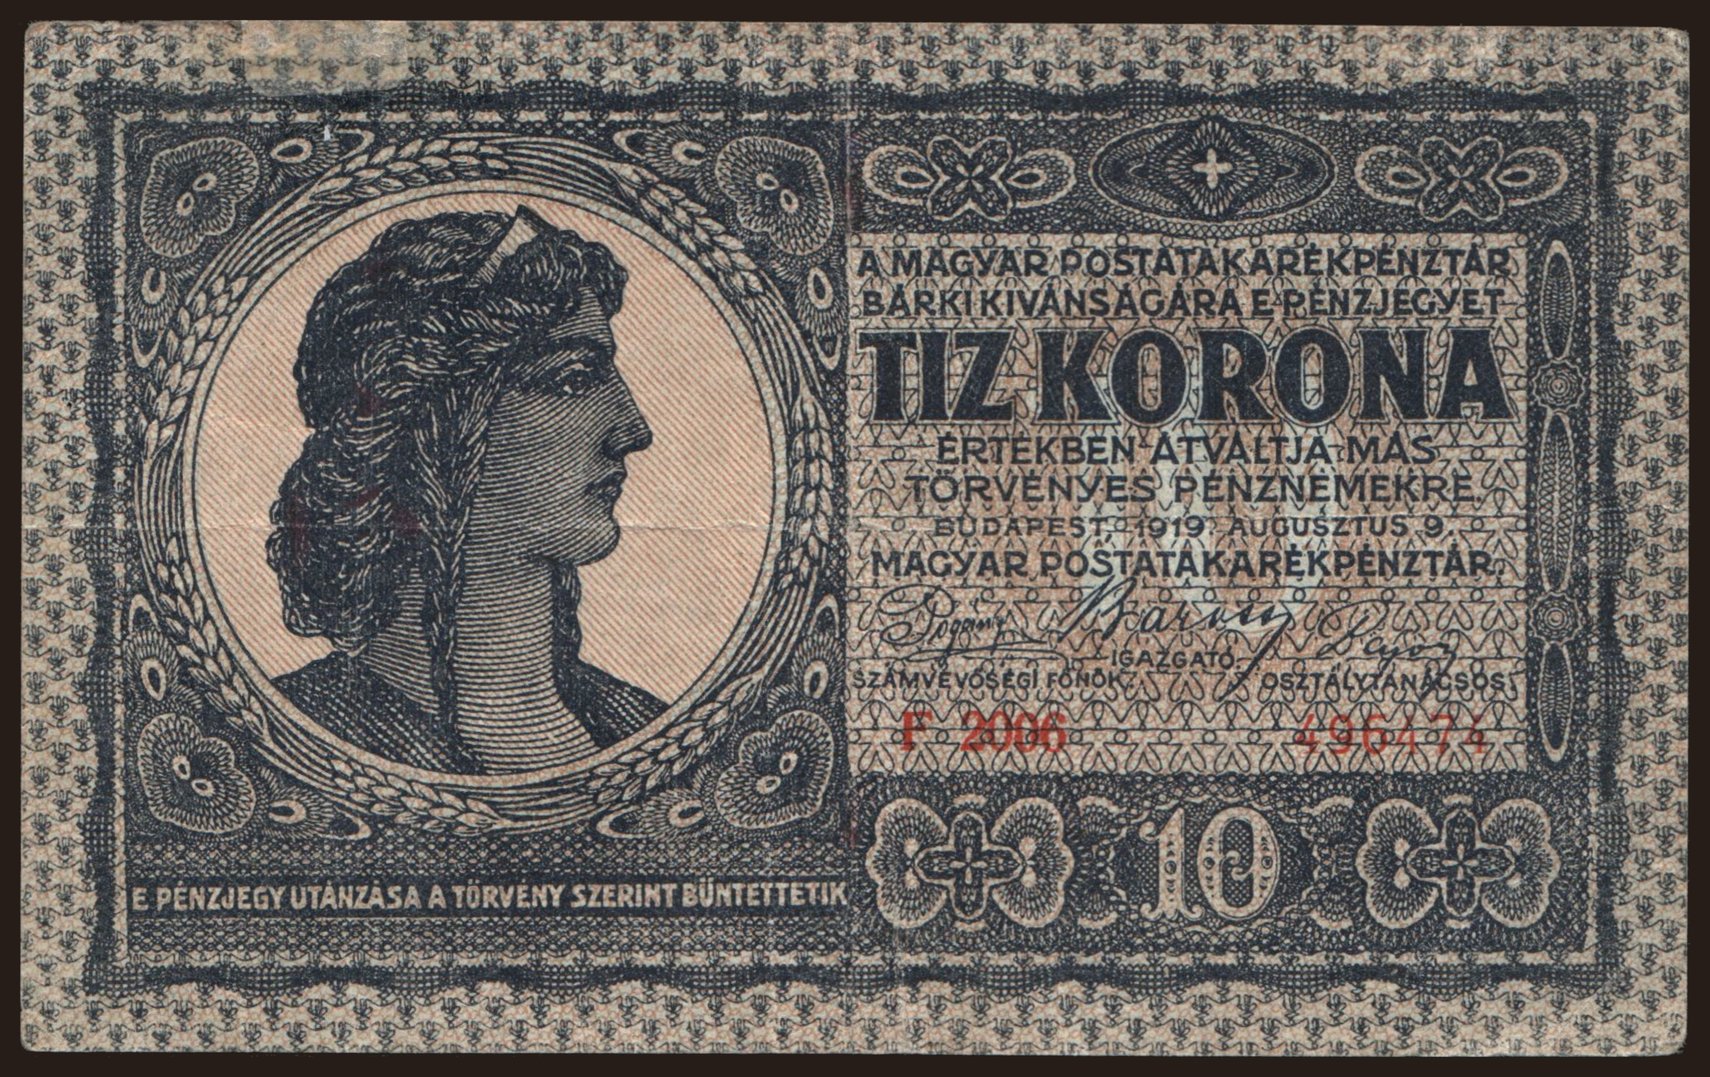 10 korona, 1919